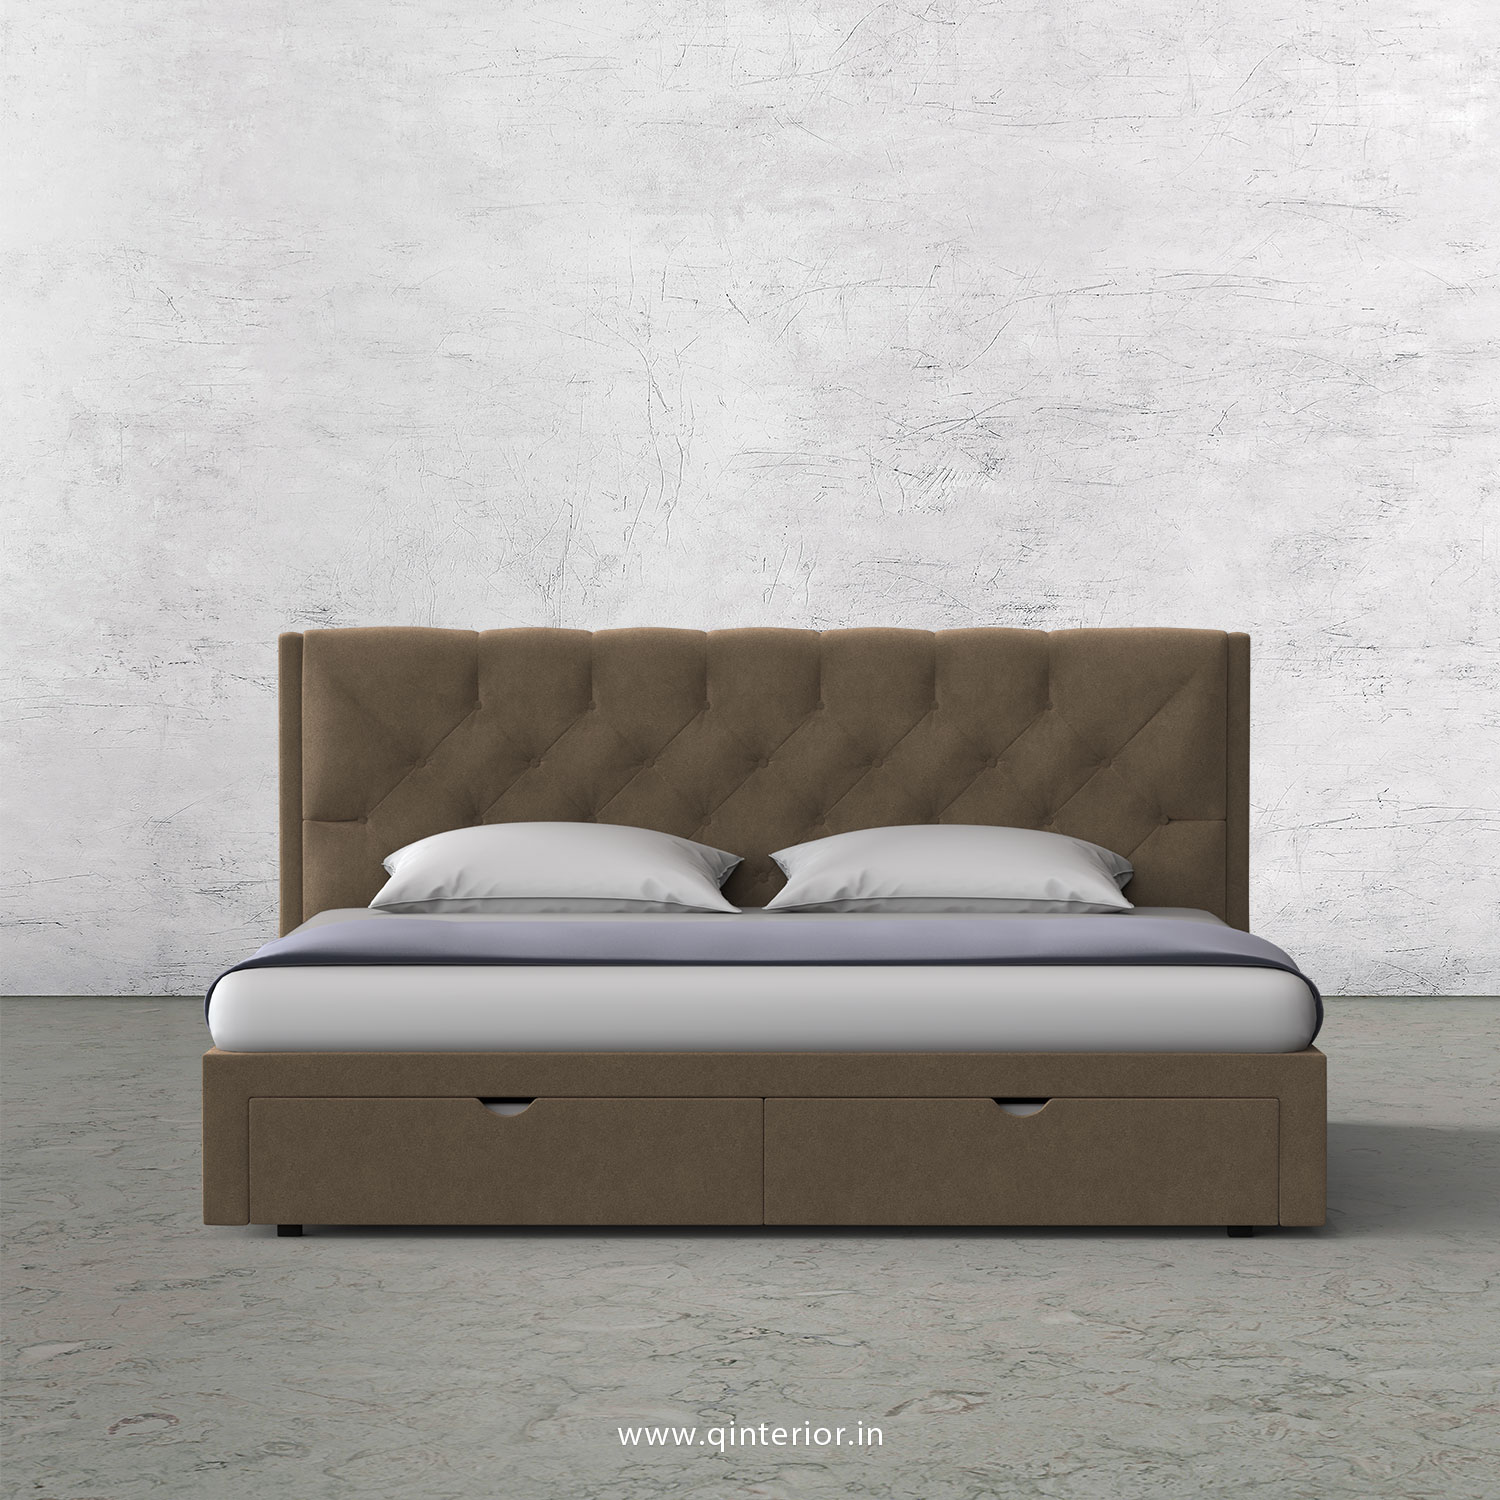 Scorpius King Size Storage Bed in Velvet Fabric - KBD001 VL03